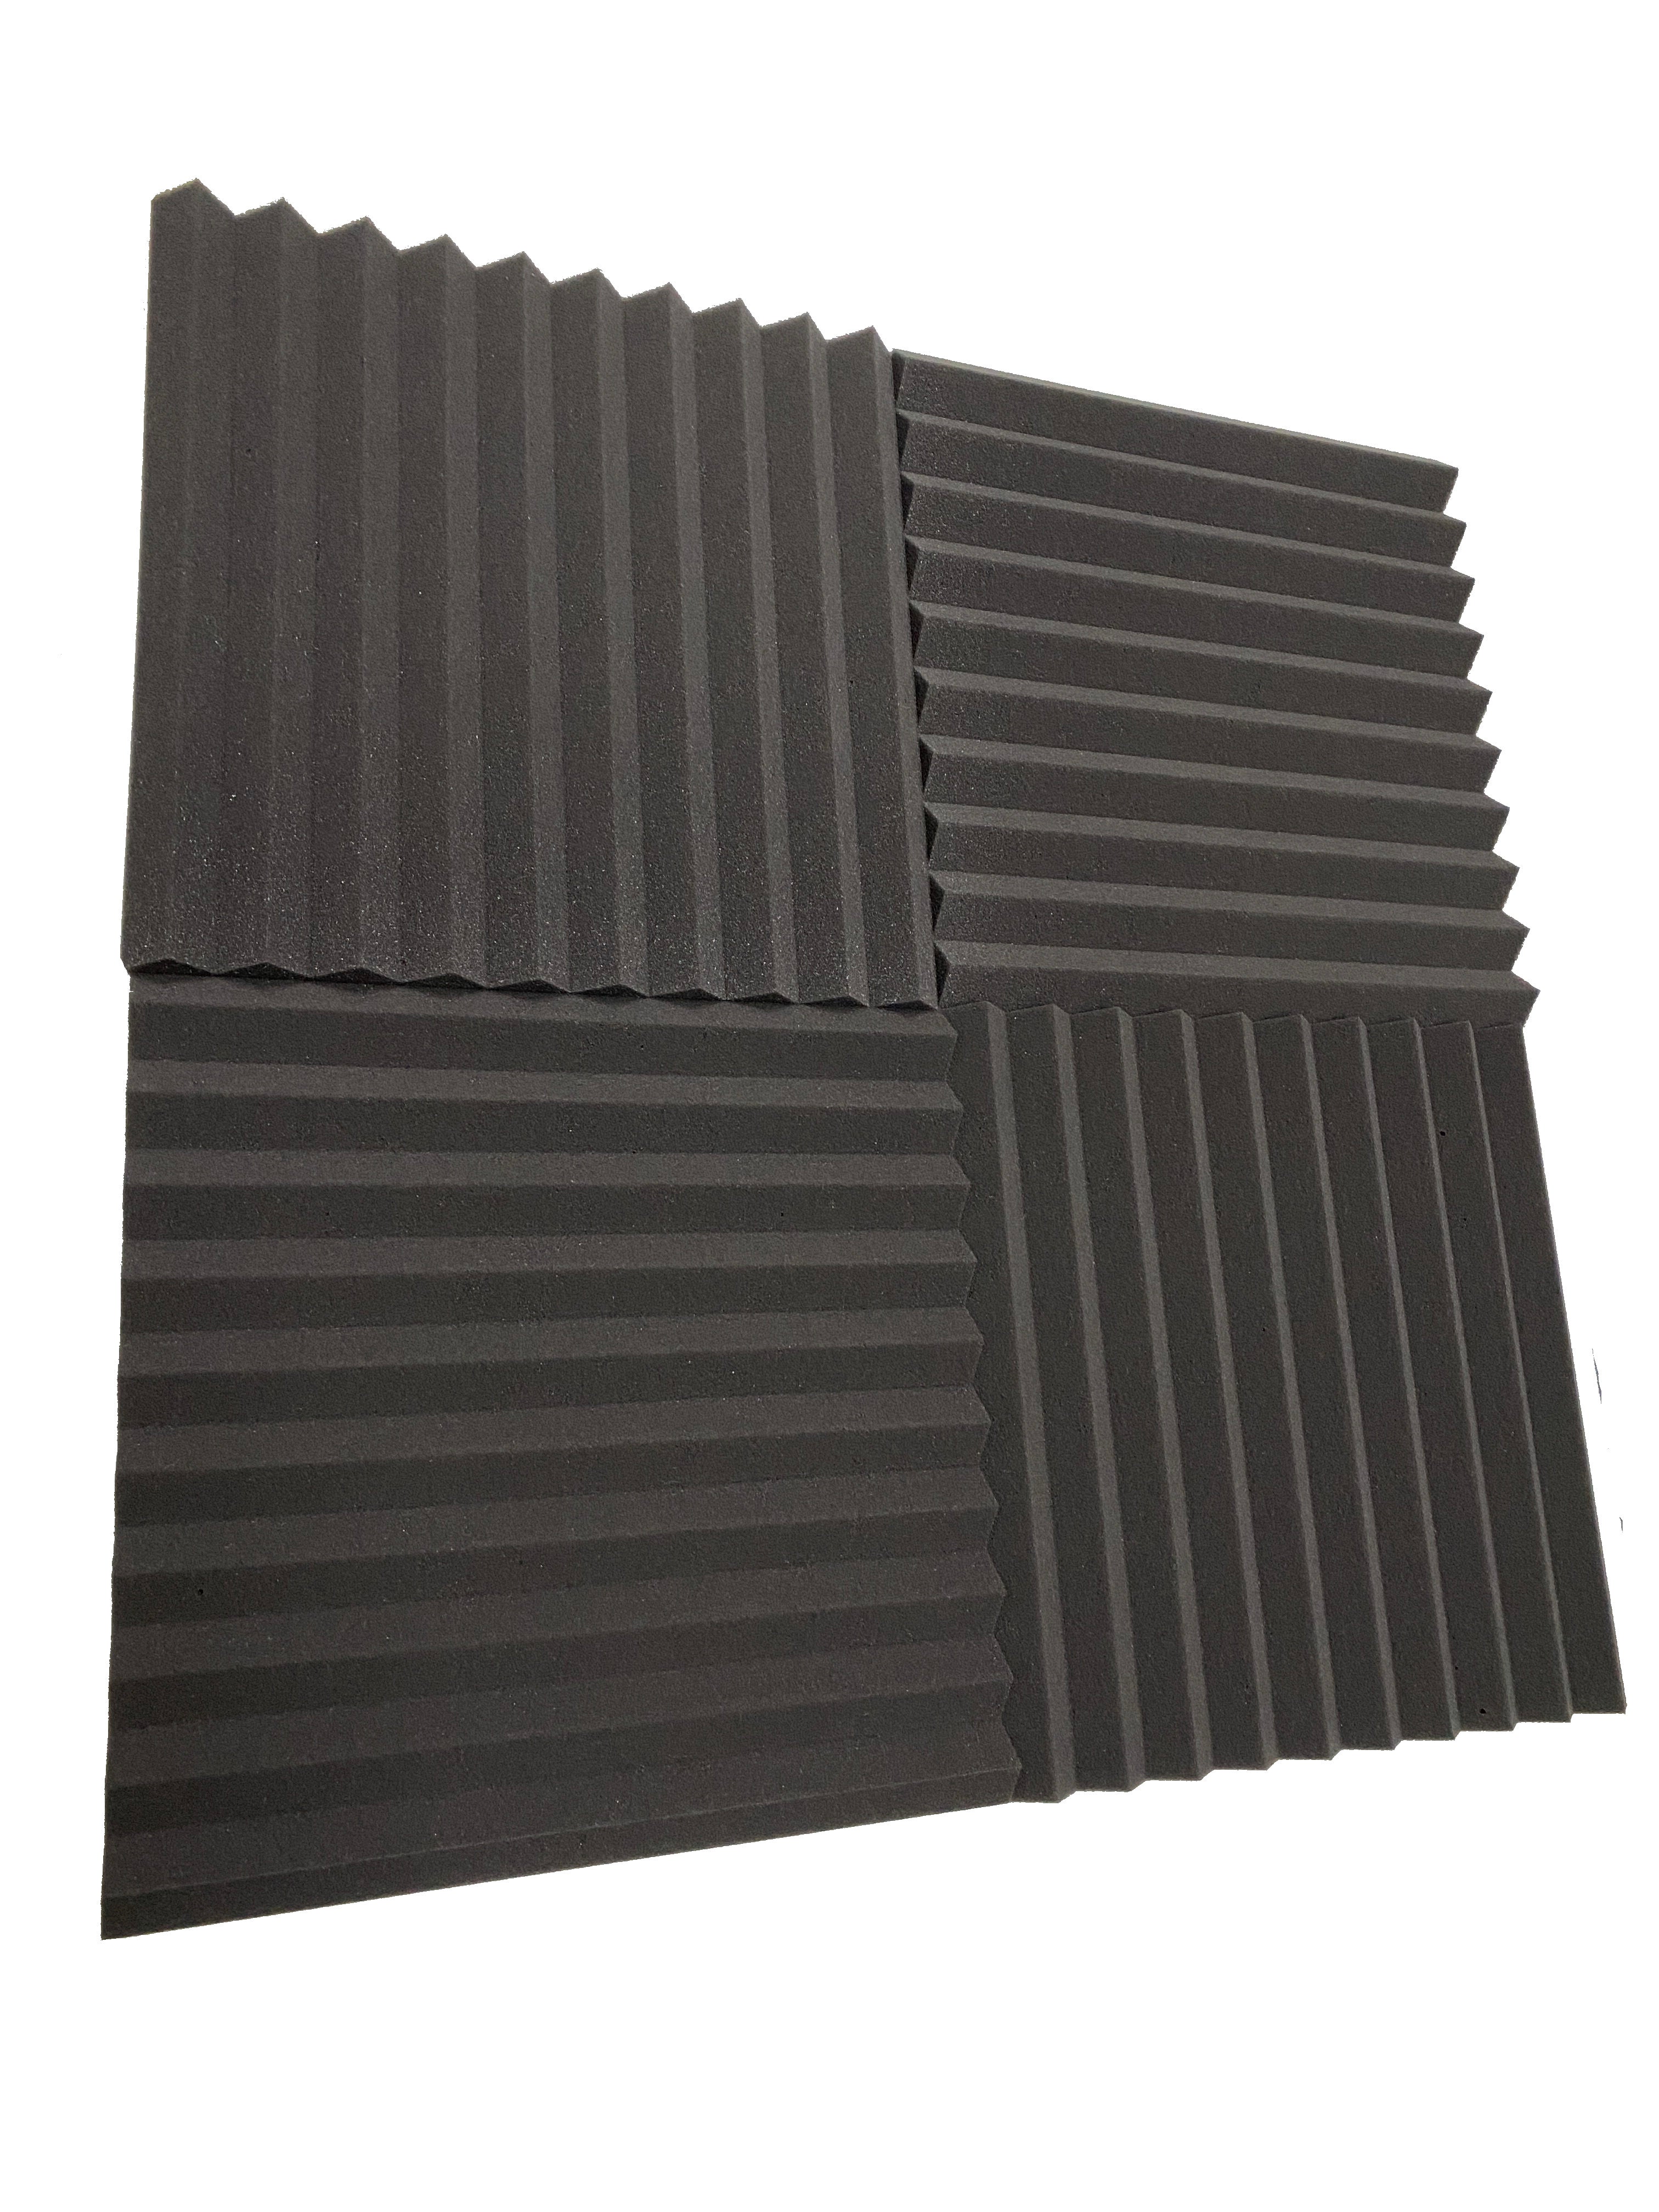 Kaufen dunkelgrau Wedge 15&quot; Acoustic Studio Foam Tile Kit – 72 Fliesen, 10,44 m² Abdeckung